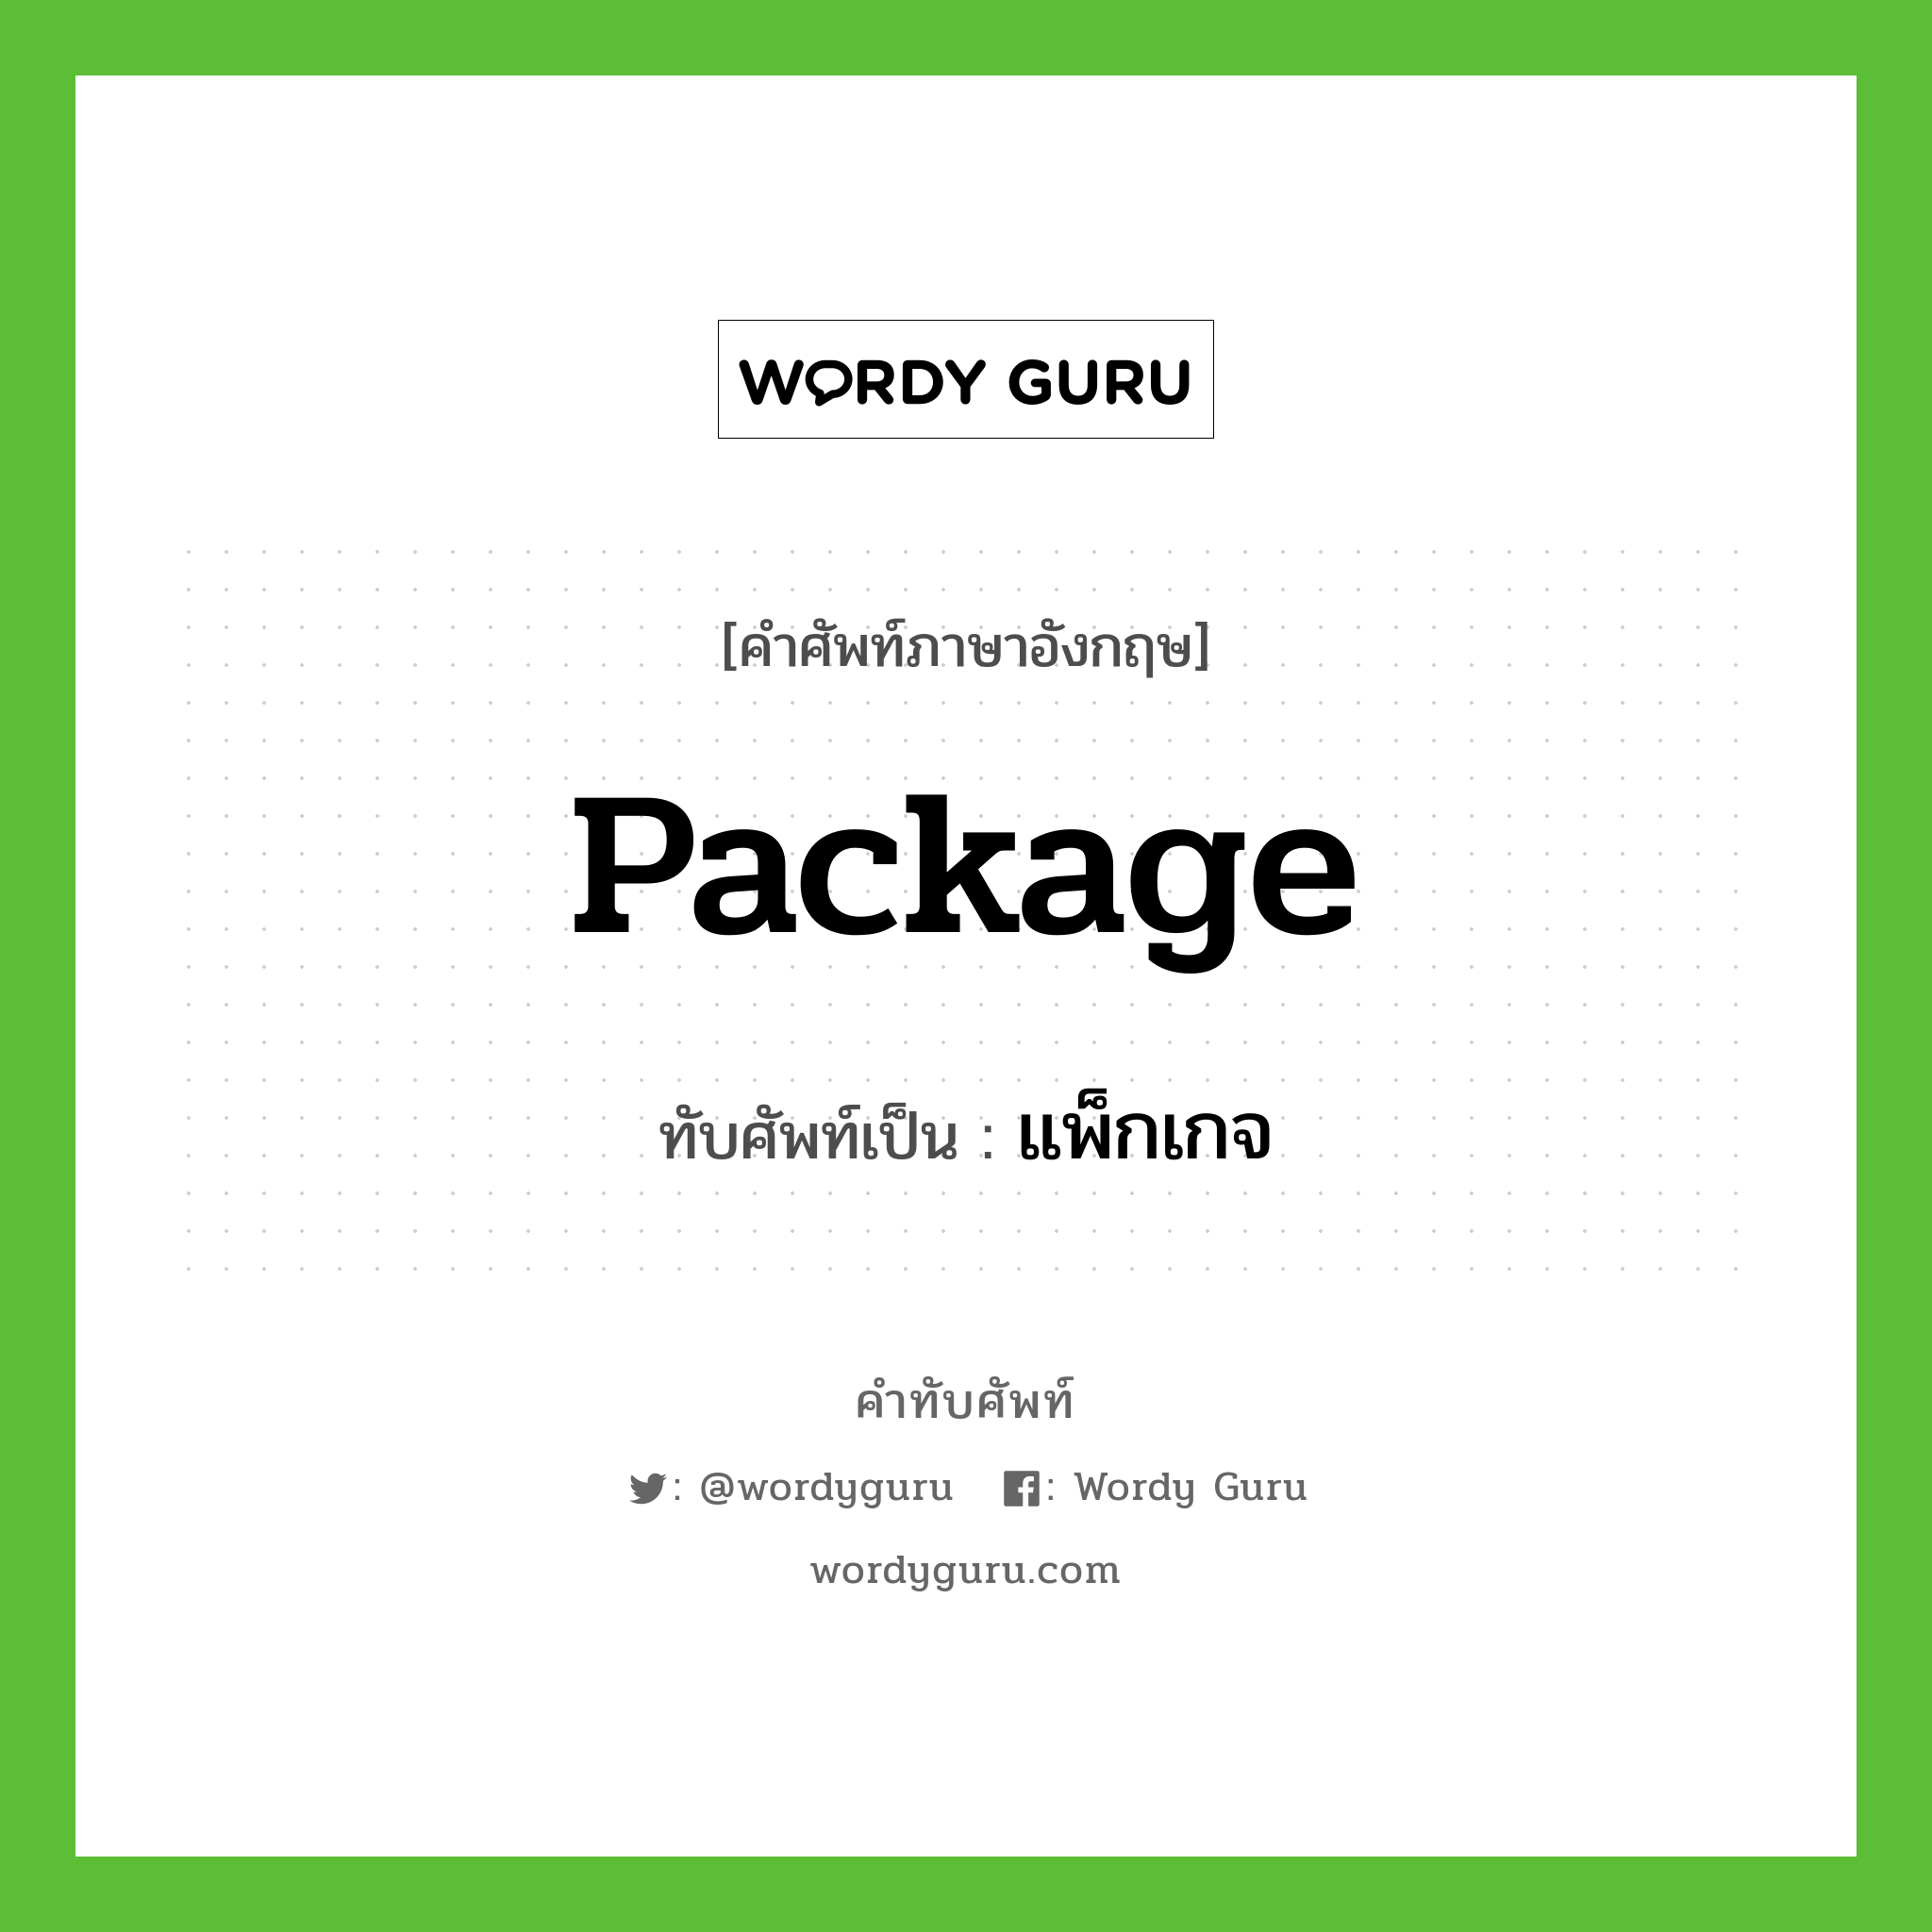 Package เขียนเป็นคำไทยว่าอะไร?, คำศัพท์ภาษาอังกฤษ Package ทับศัพท์เป็น แพ็กเกจ